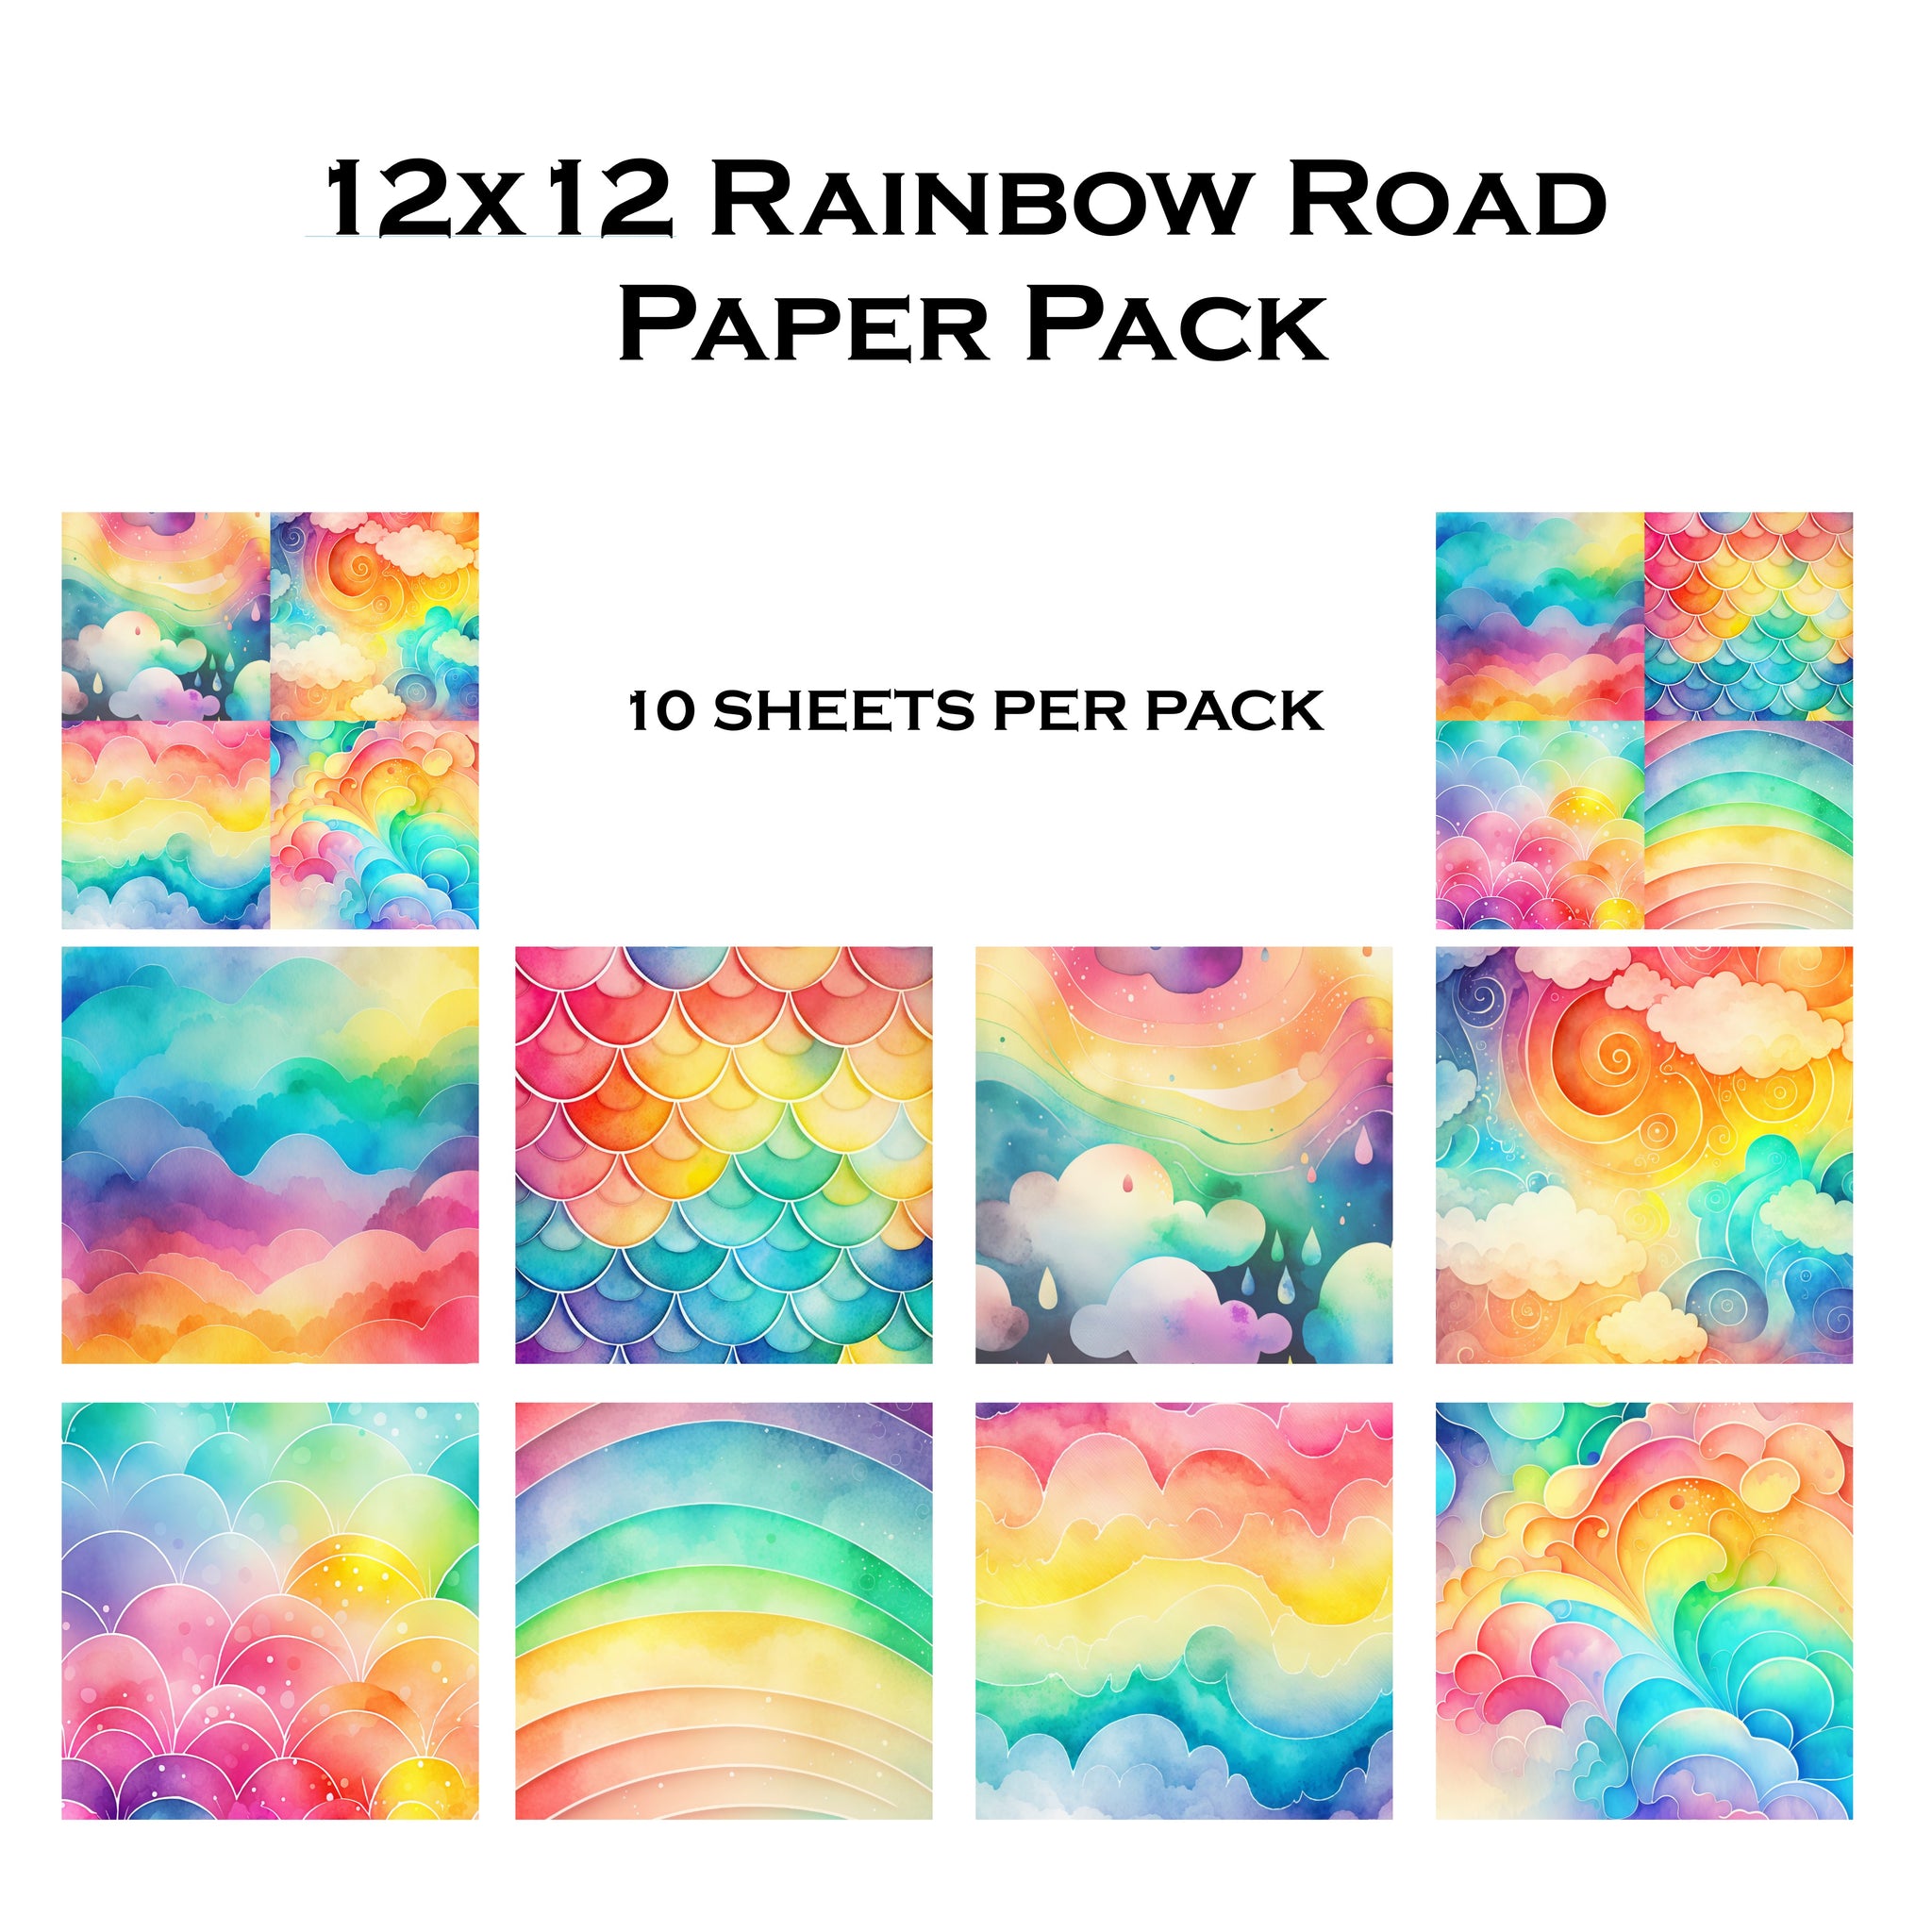 Rainbow Road 12x12 Paper Pack